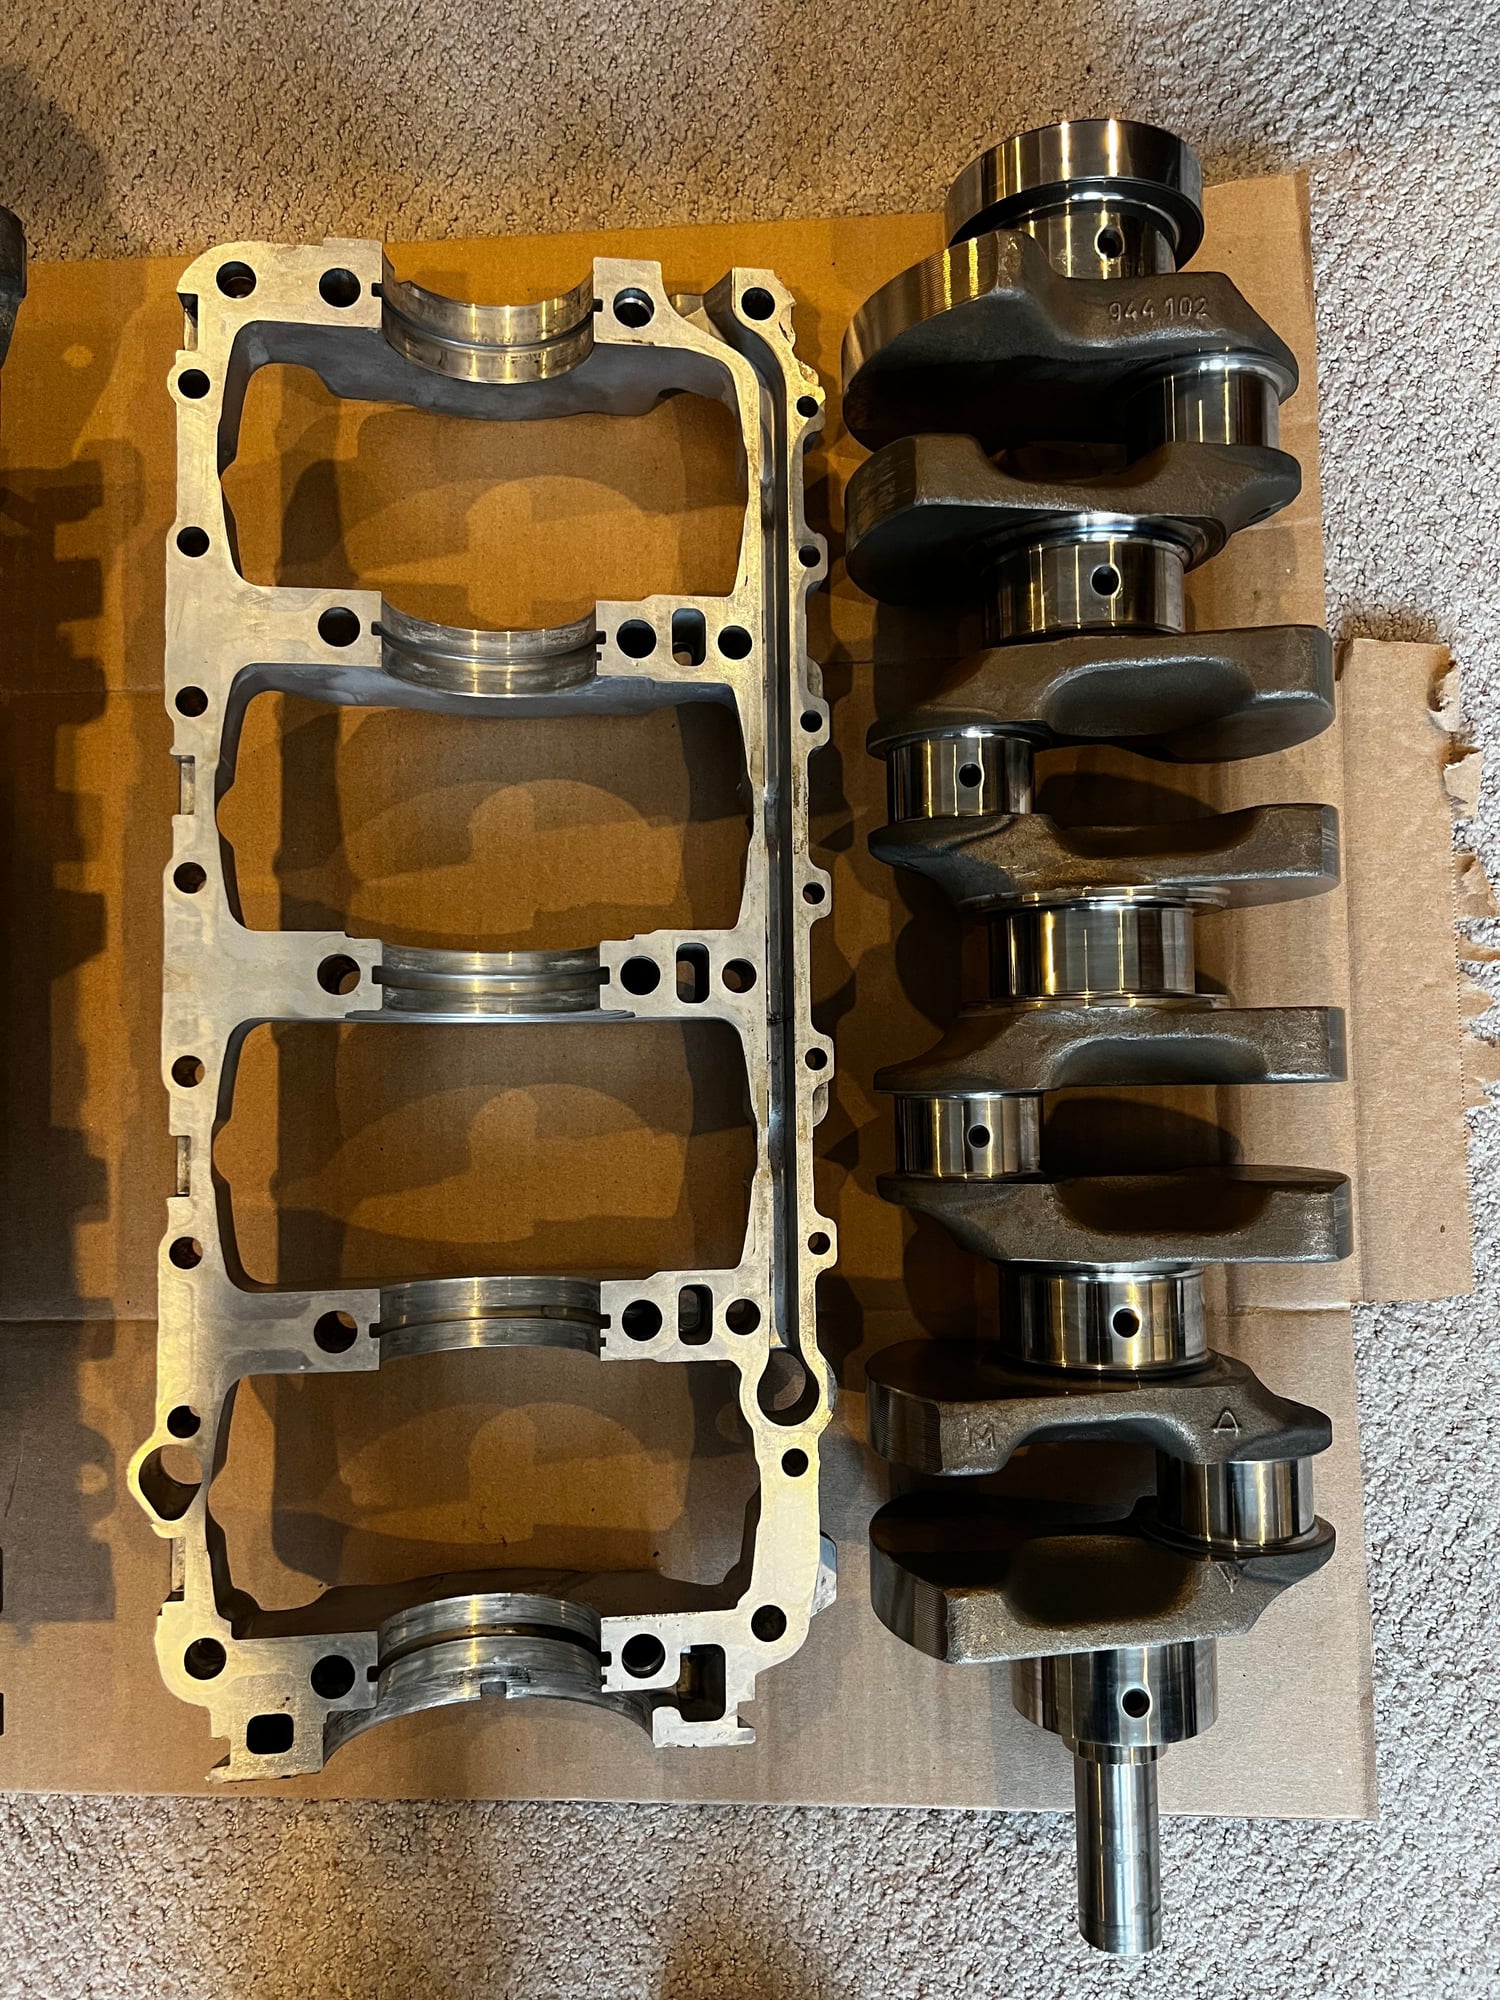 Engine - Complete - Porsche 944 S2 disassembled engine M44/41 104mm - Used - 1984 to 1992 Porsche 944 - Bethesda, MD 20814, United States